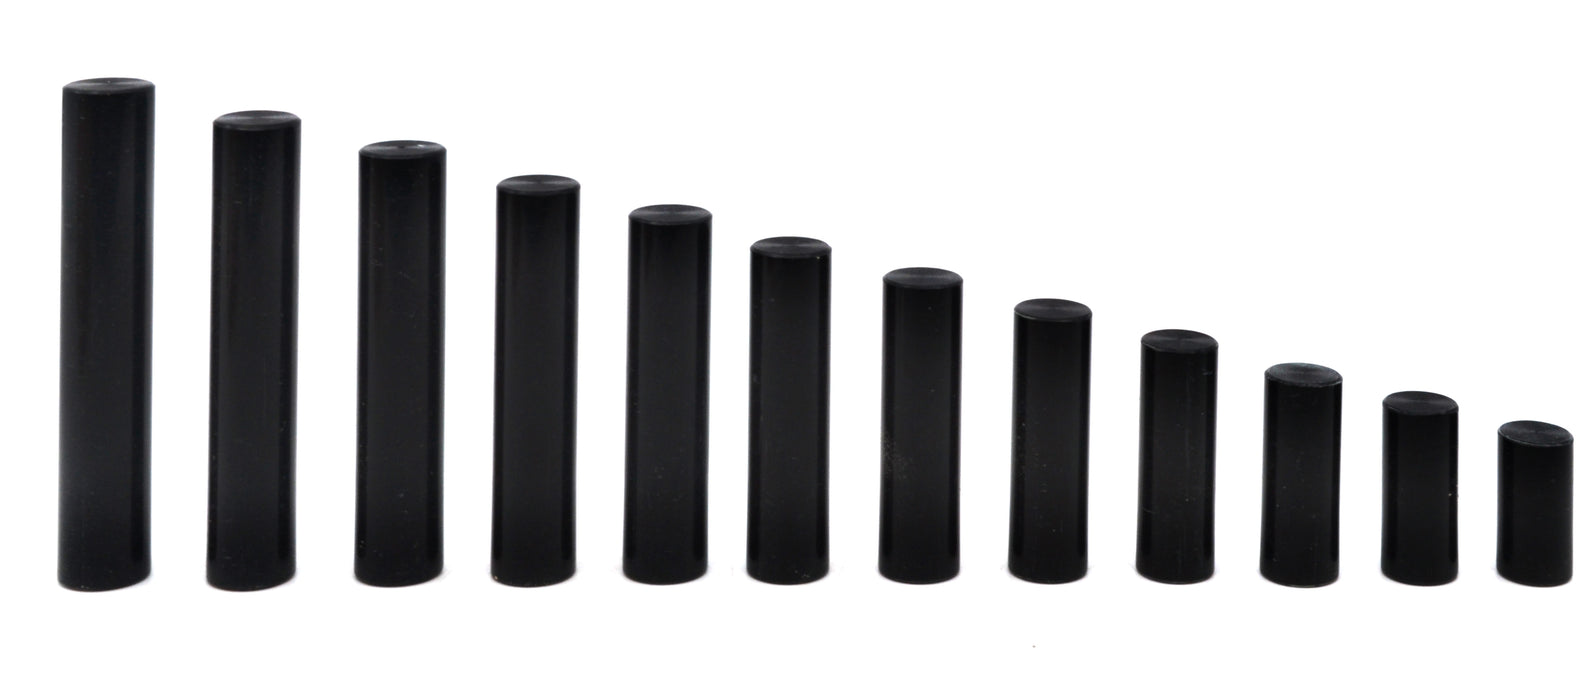 12pc Cylindrical Bars Density Set, Black Derlin - Wooden Storage Block